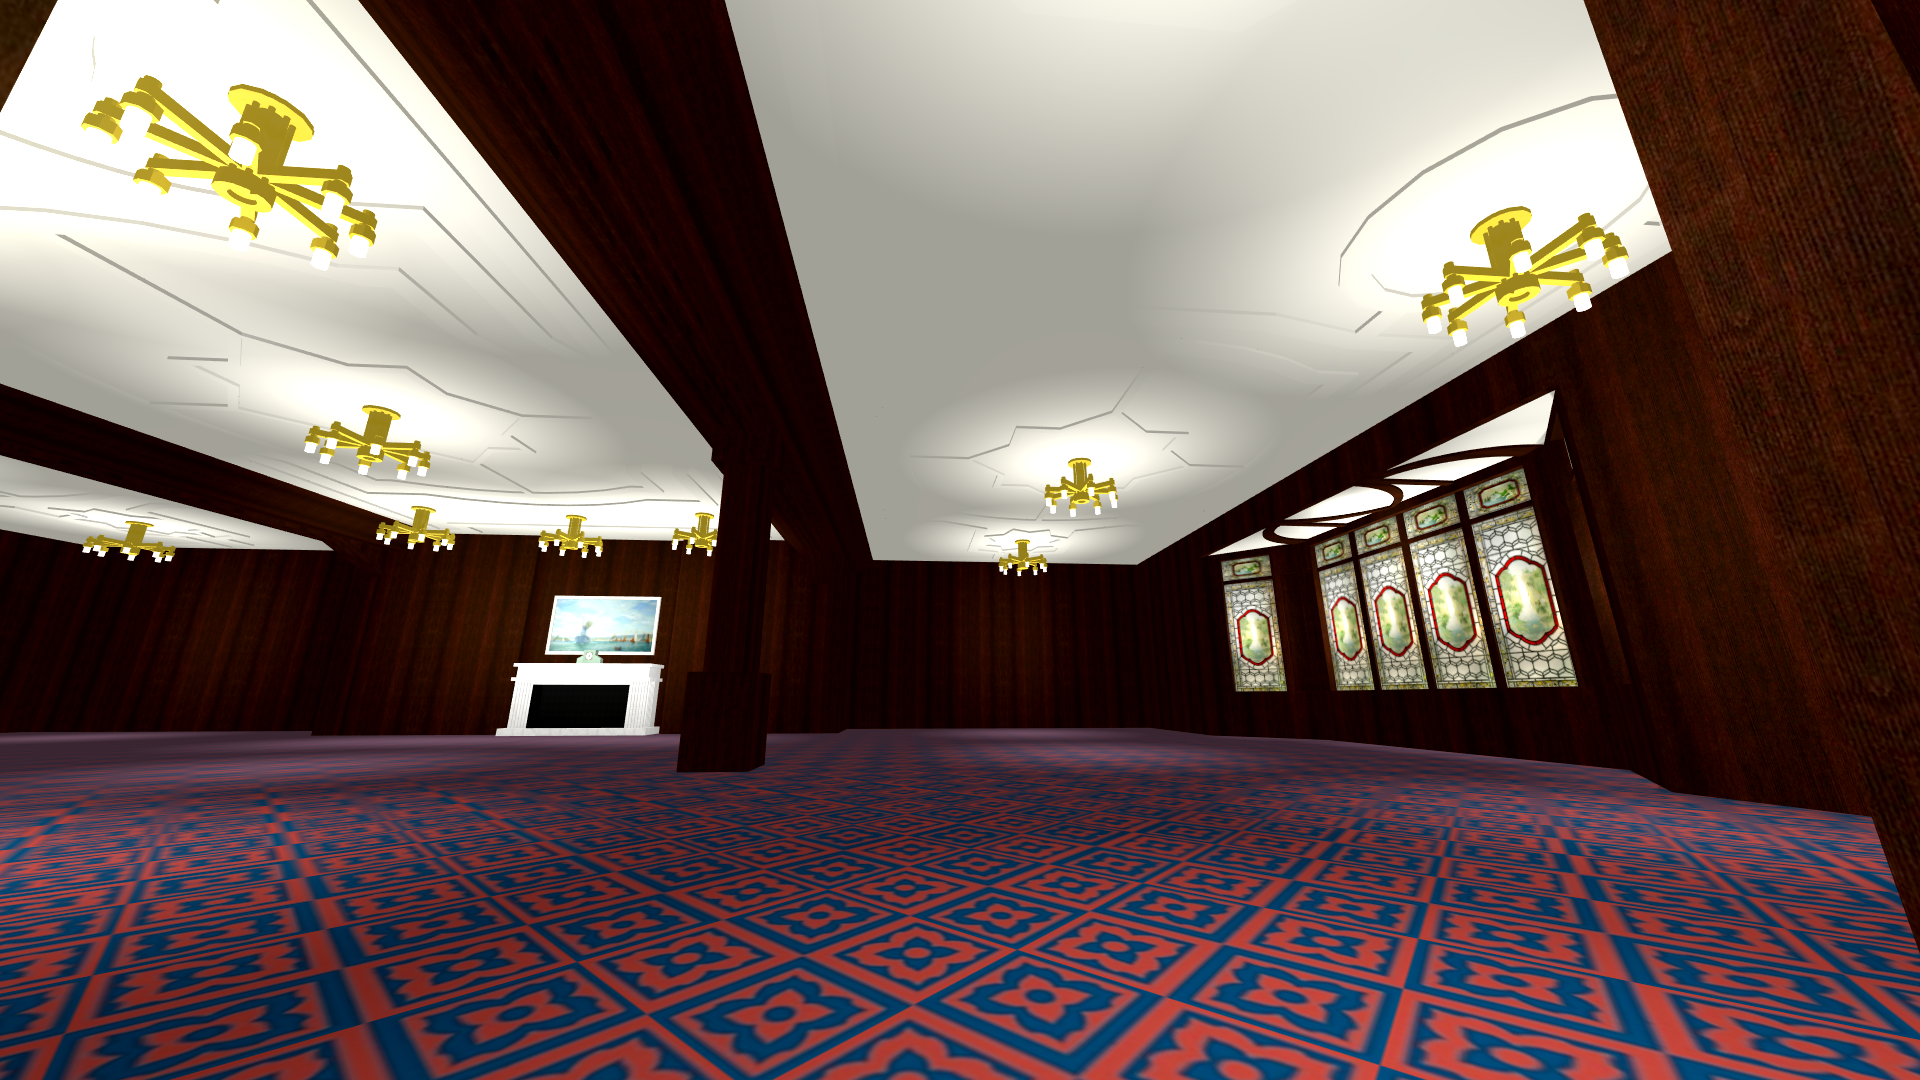 titanic honor and glory demo 2 lounge corridor